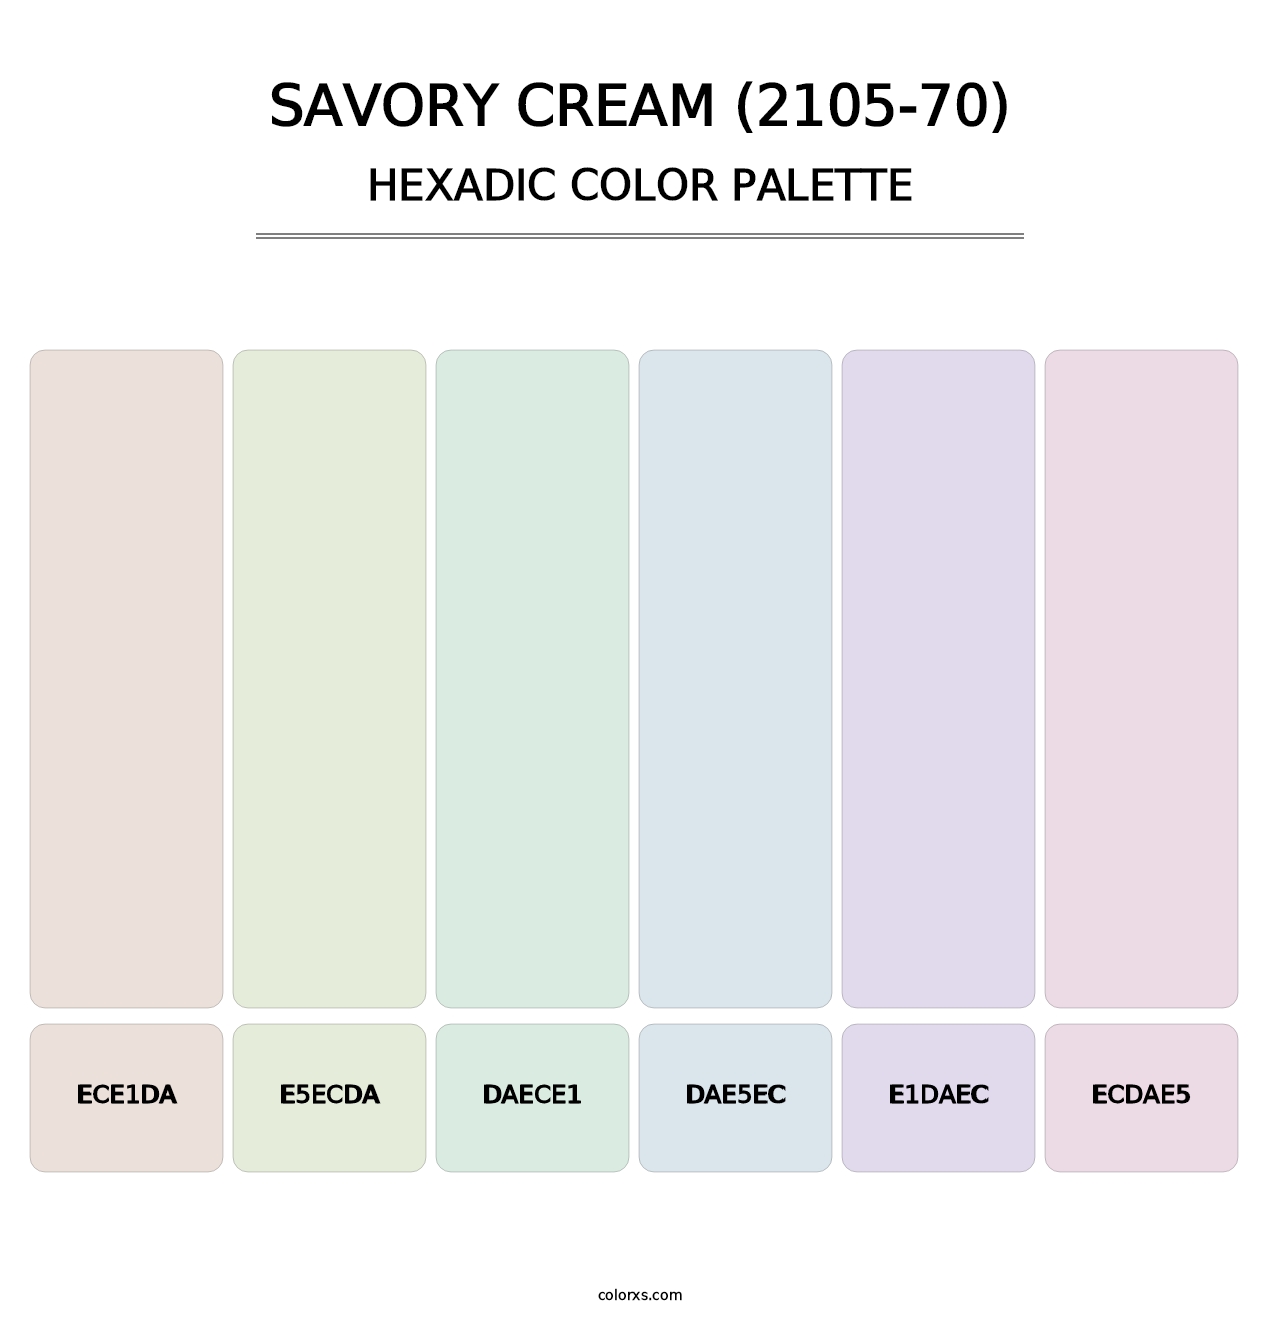 Savory Cream (2105-70) - Hexadic Color Palette